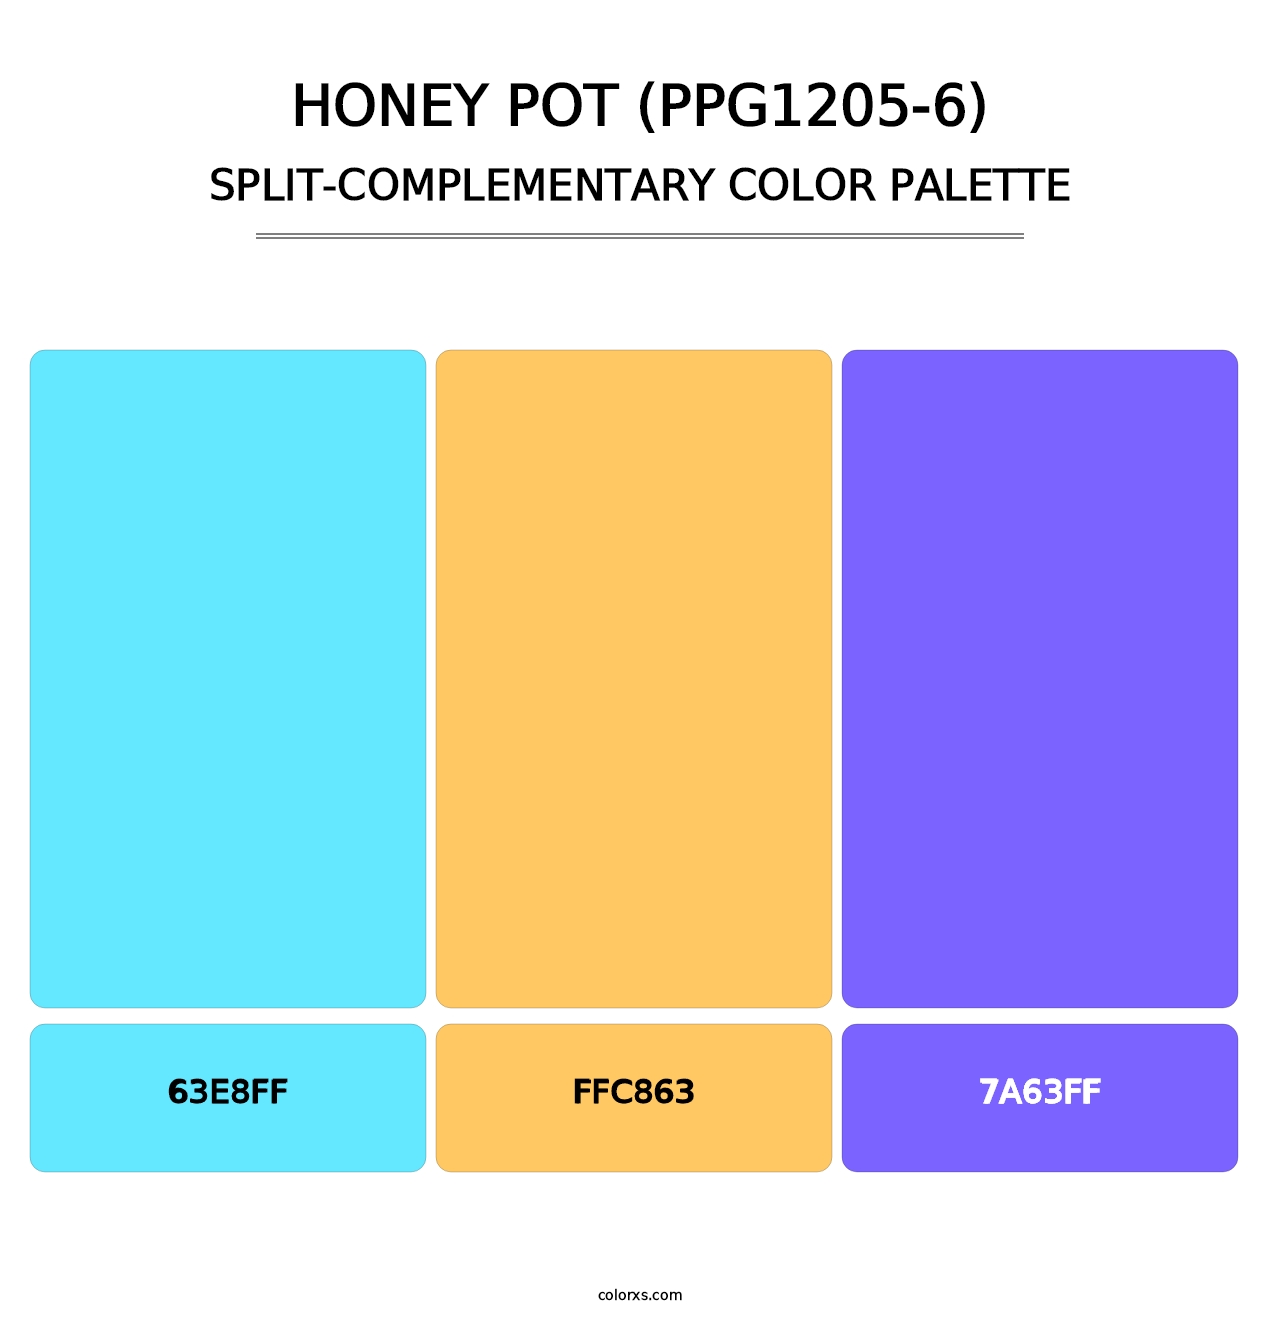 Honey Pot (PPG1205-6) - Split-Complementary Color Palette